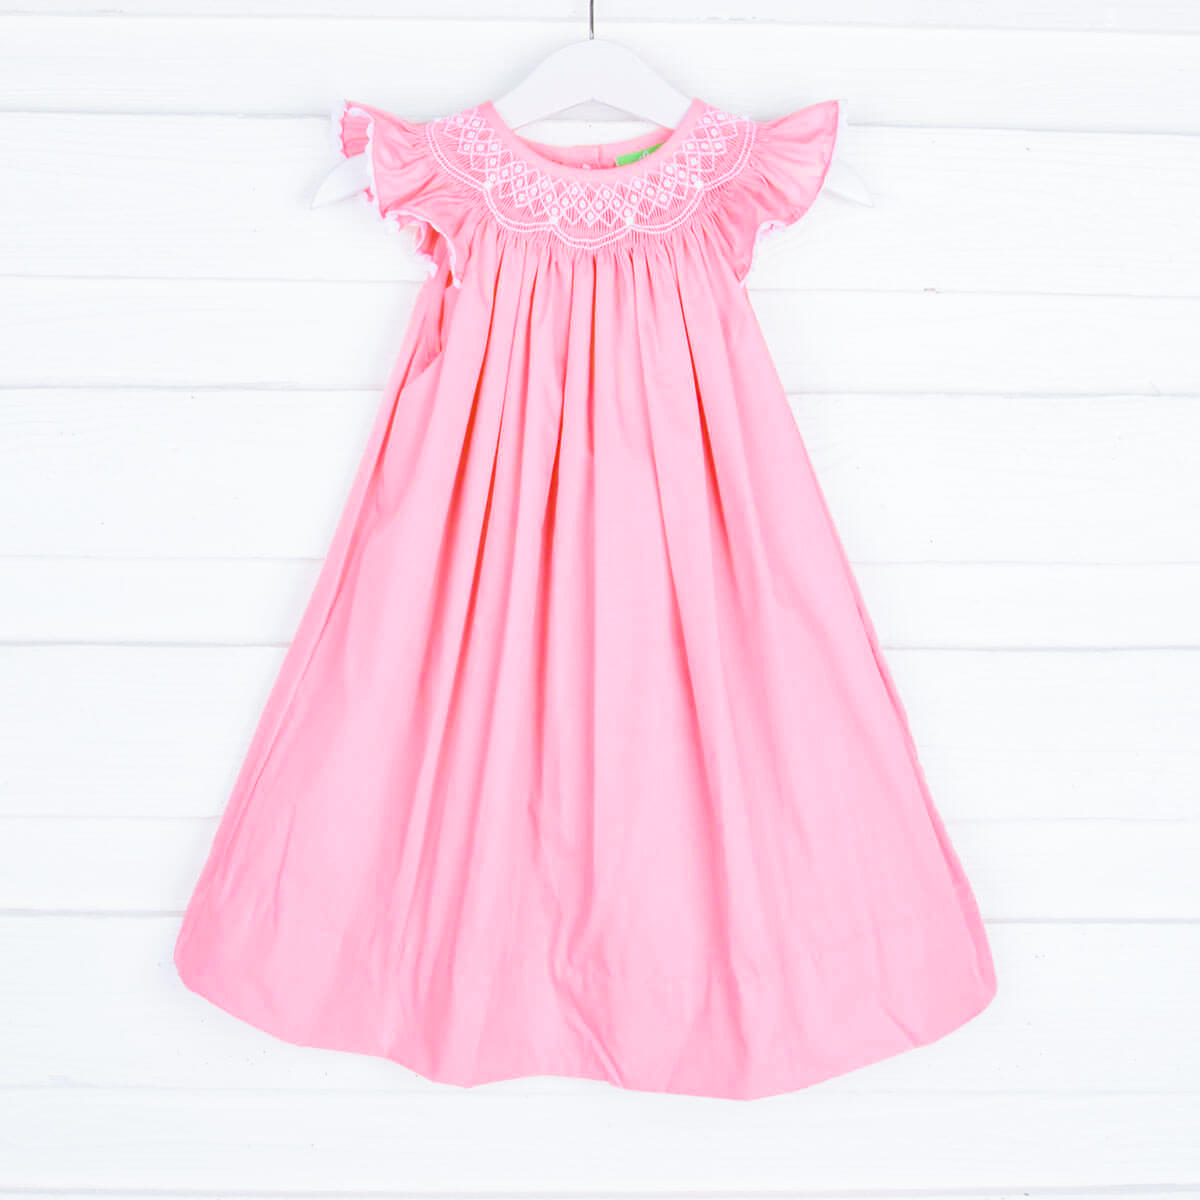 Geometric Smocked Pink Dress